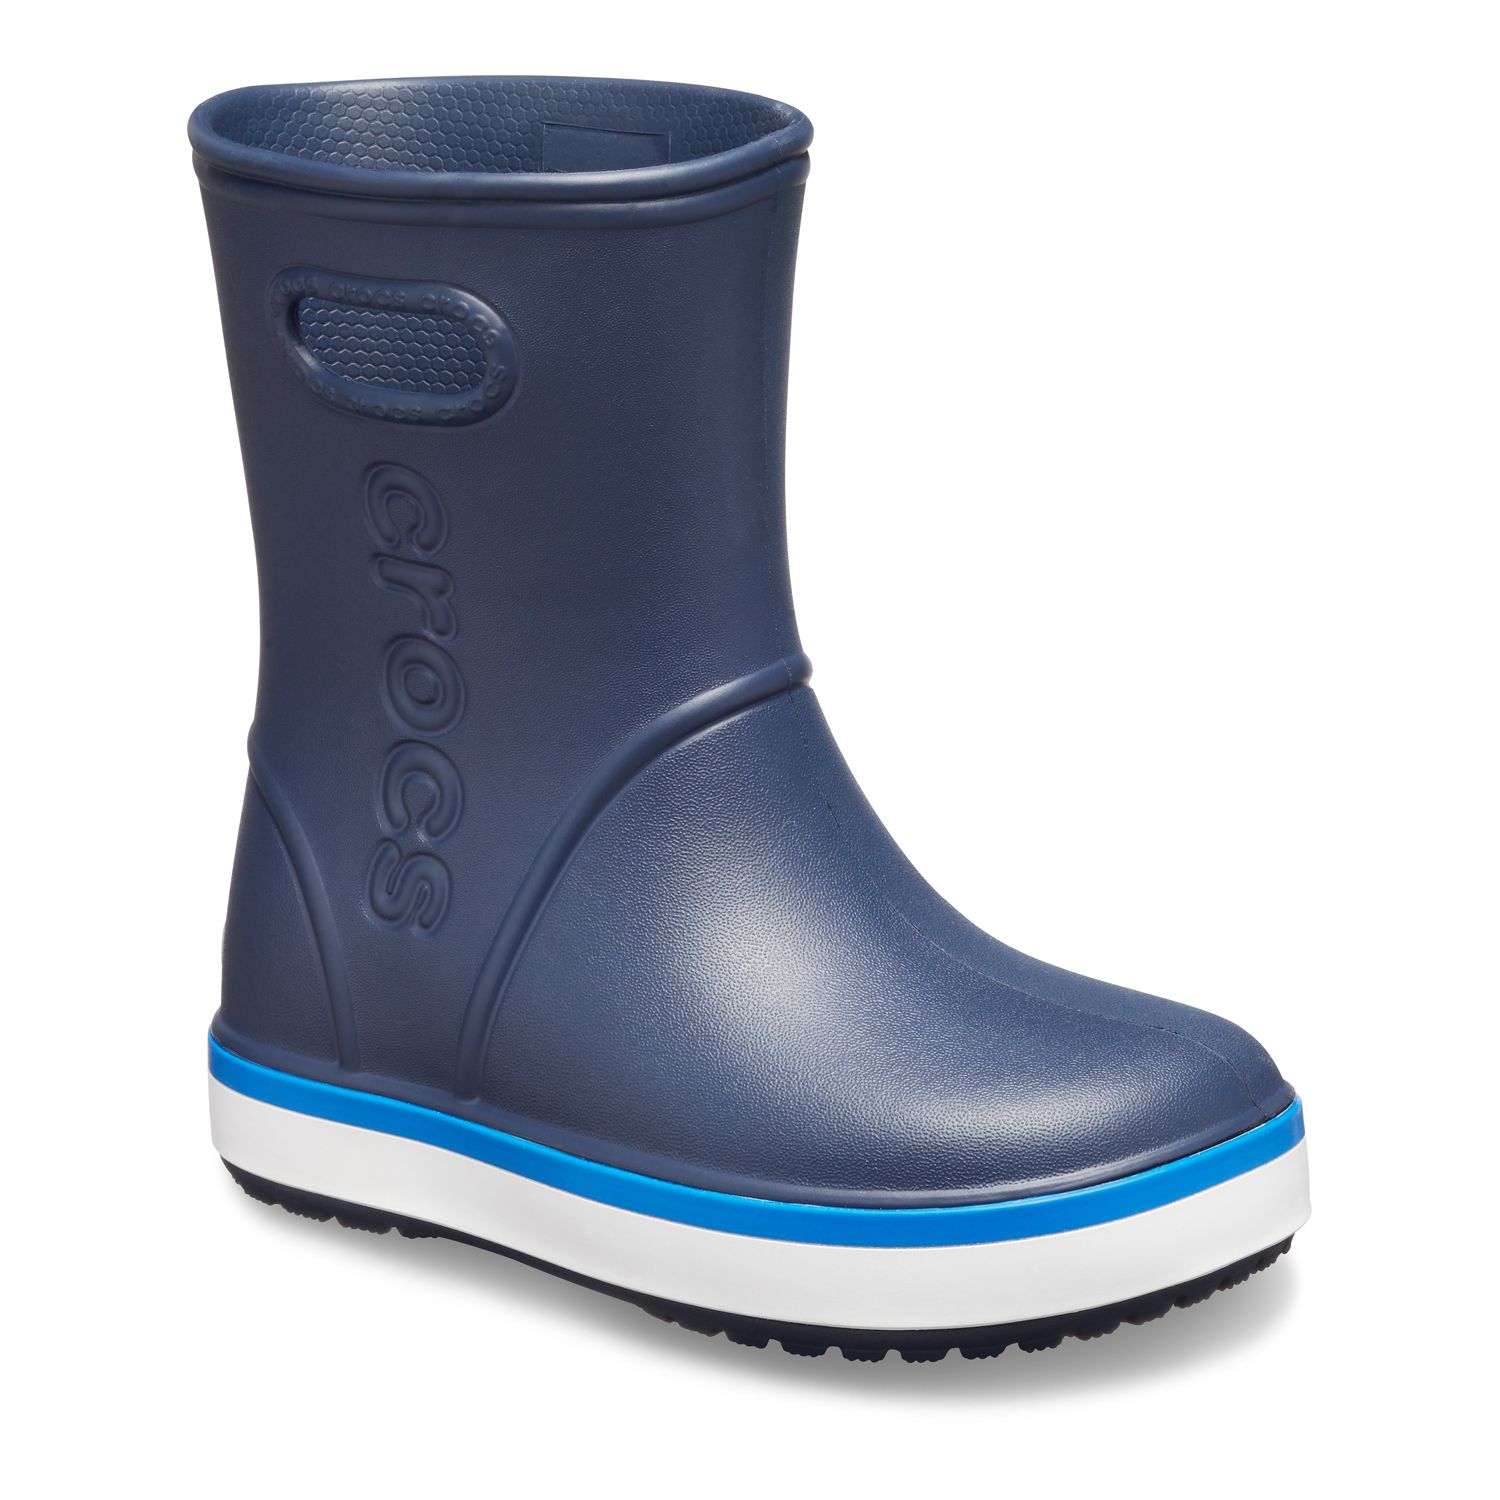 Crocs Crocband Boys' Waterproof Rain Boots